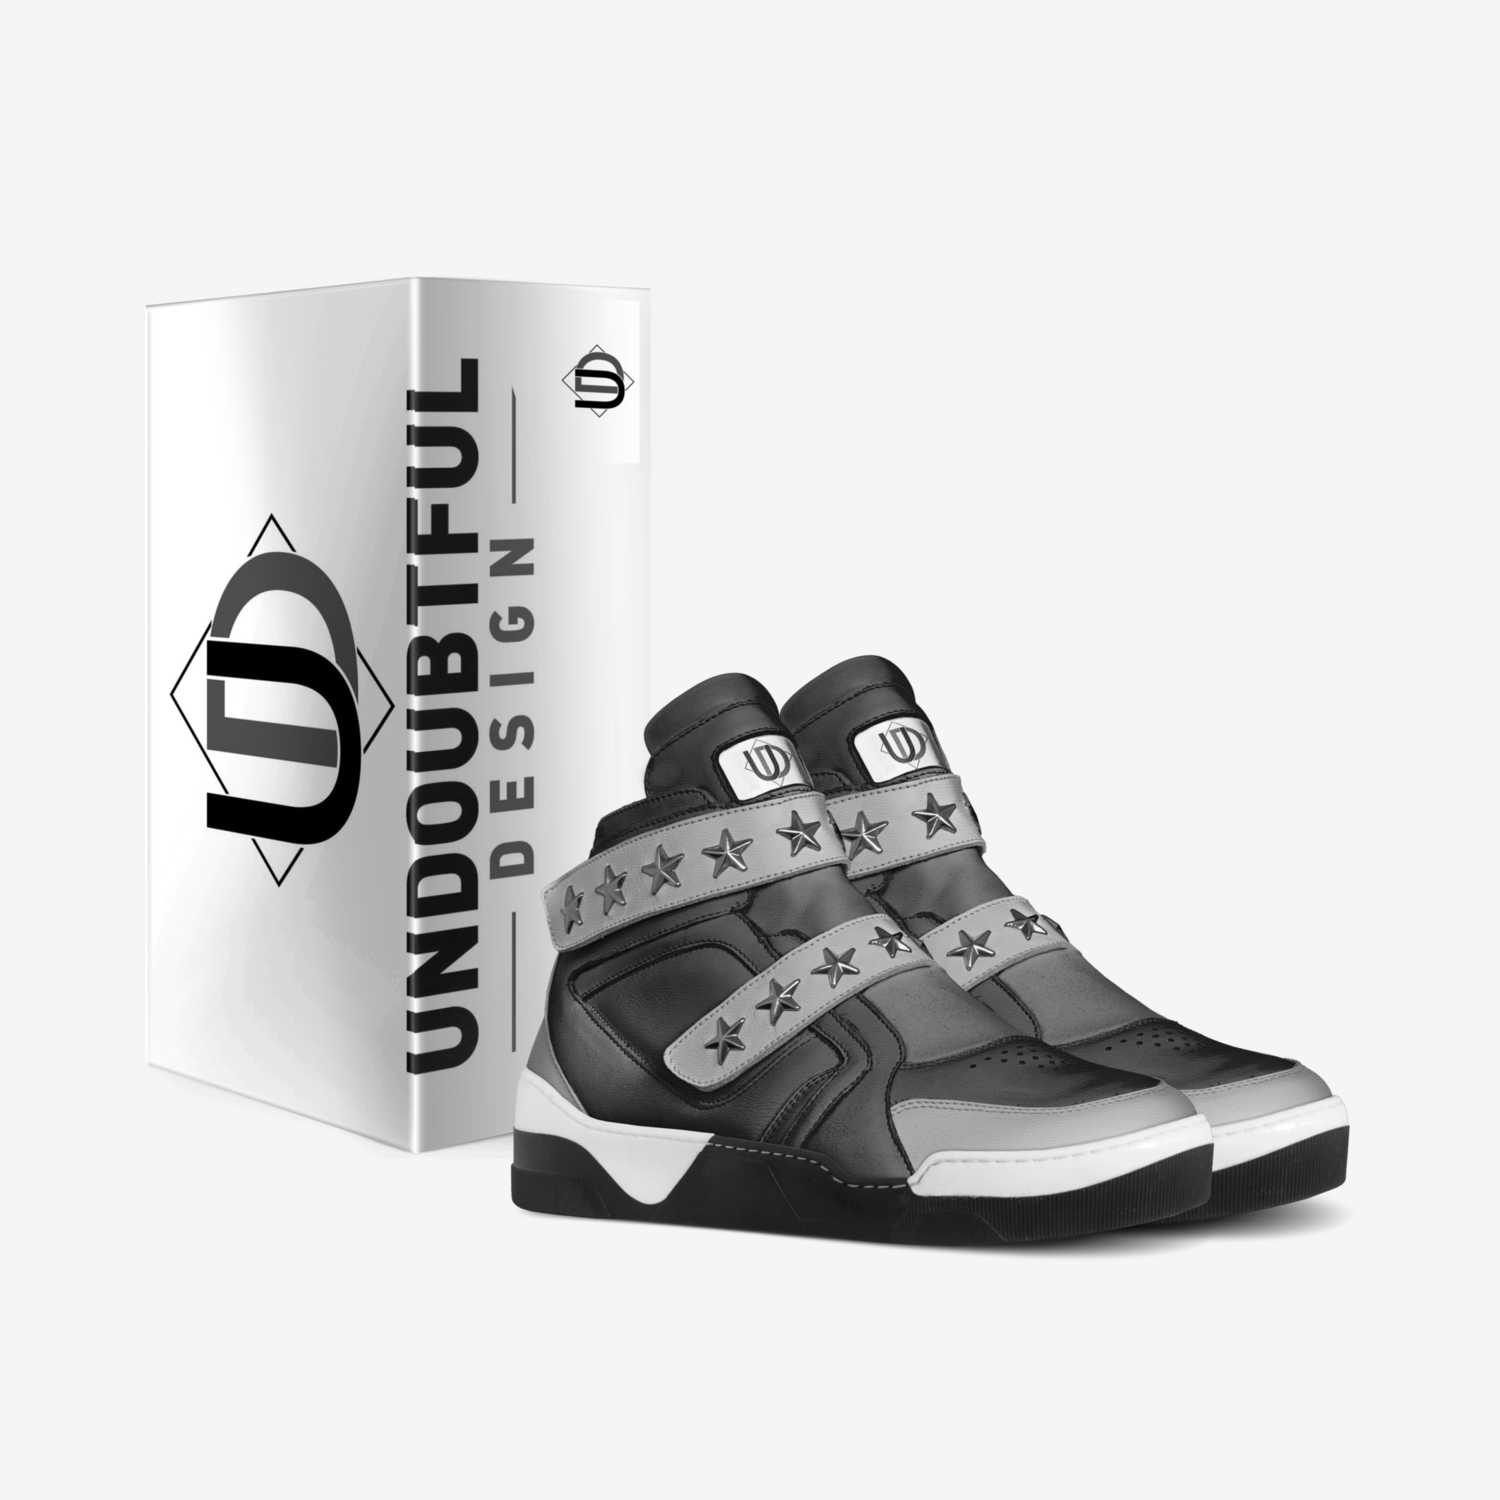 UNDOUBTFUL DESIGN custom made in Italy shoes by Danar Gorham | Box view